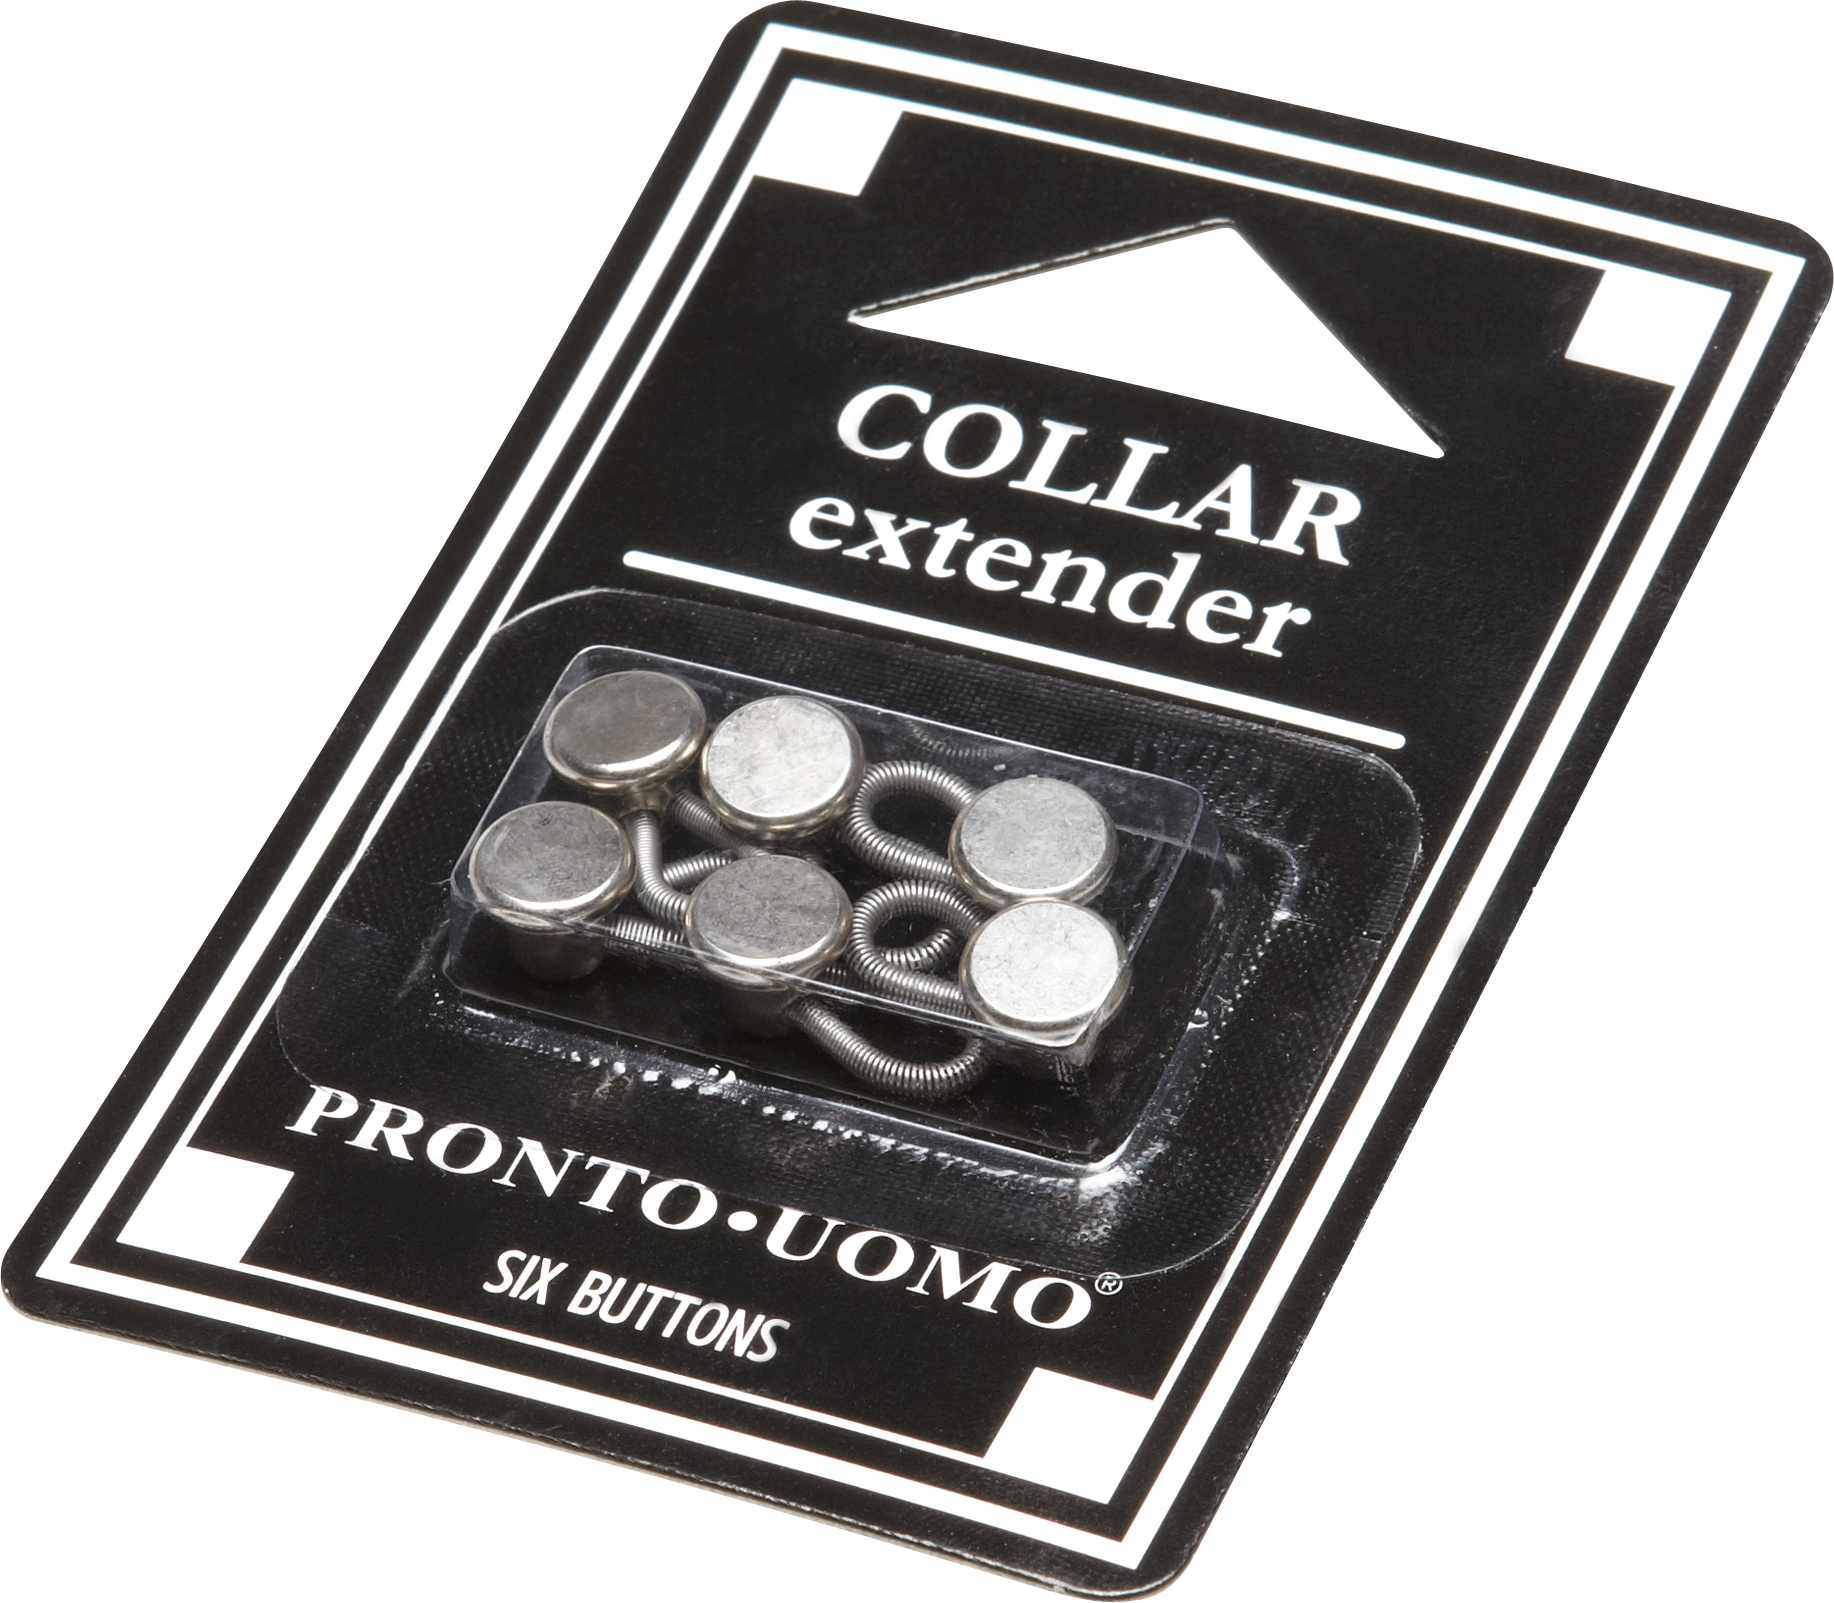 Collar Extender for sale